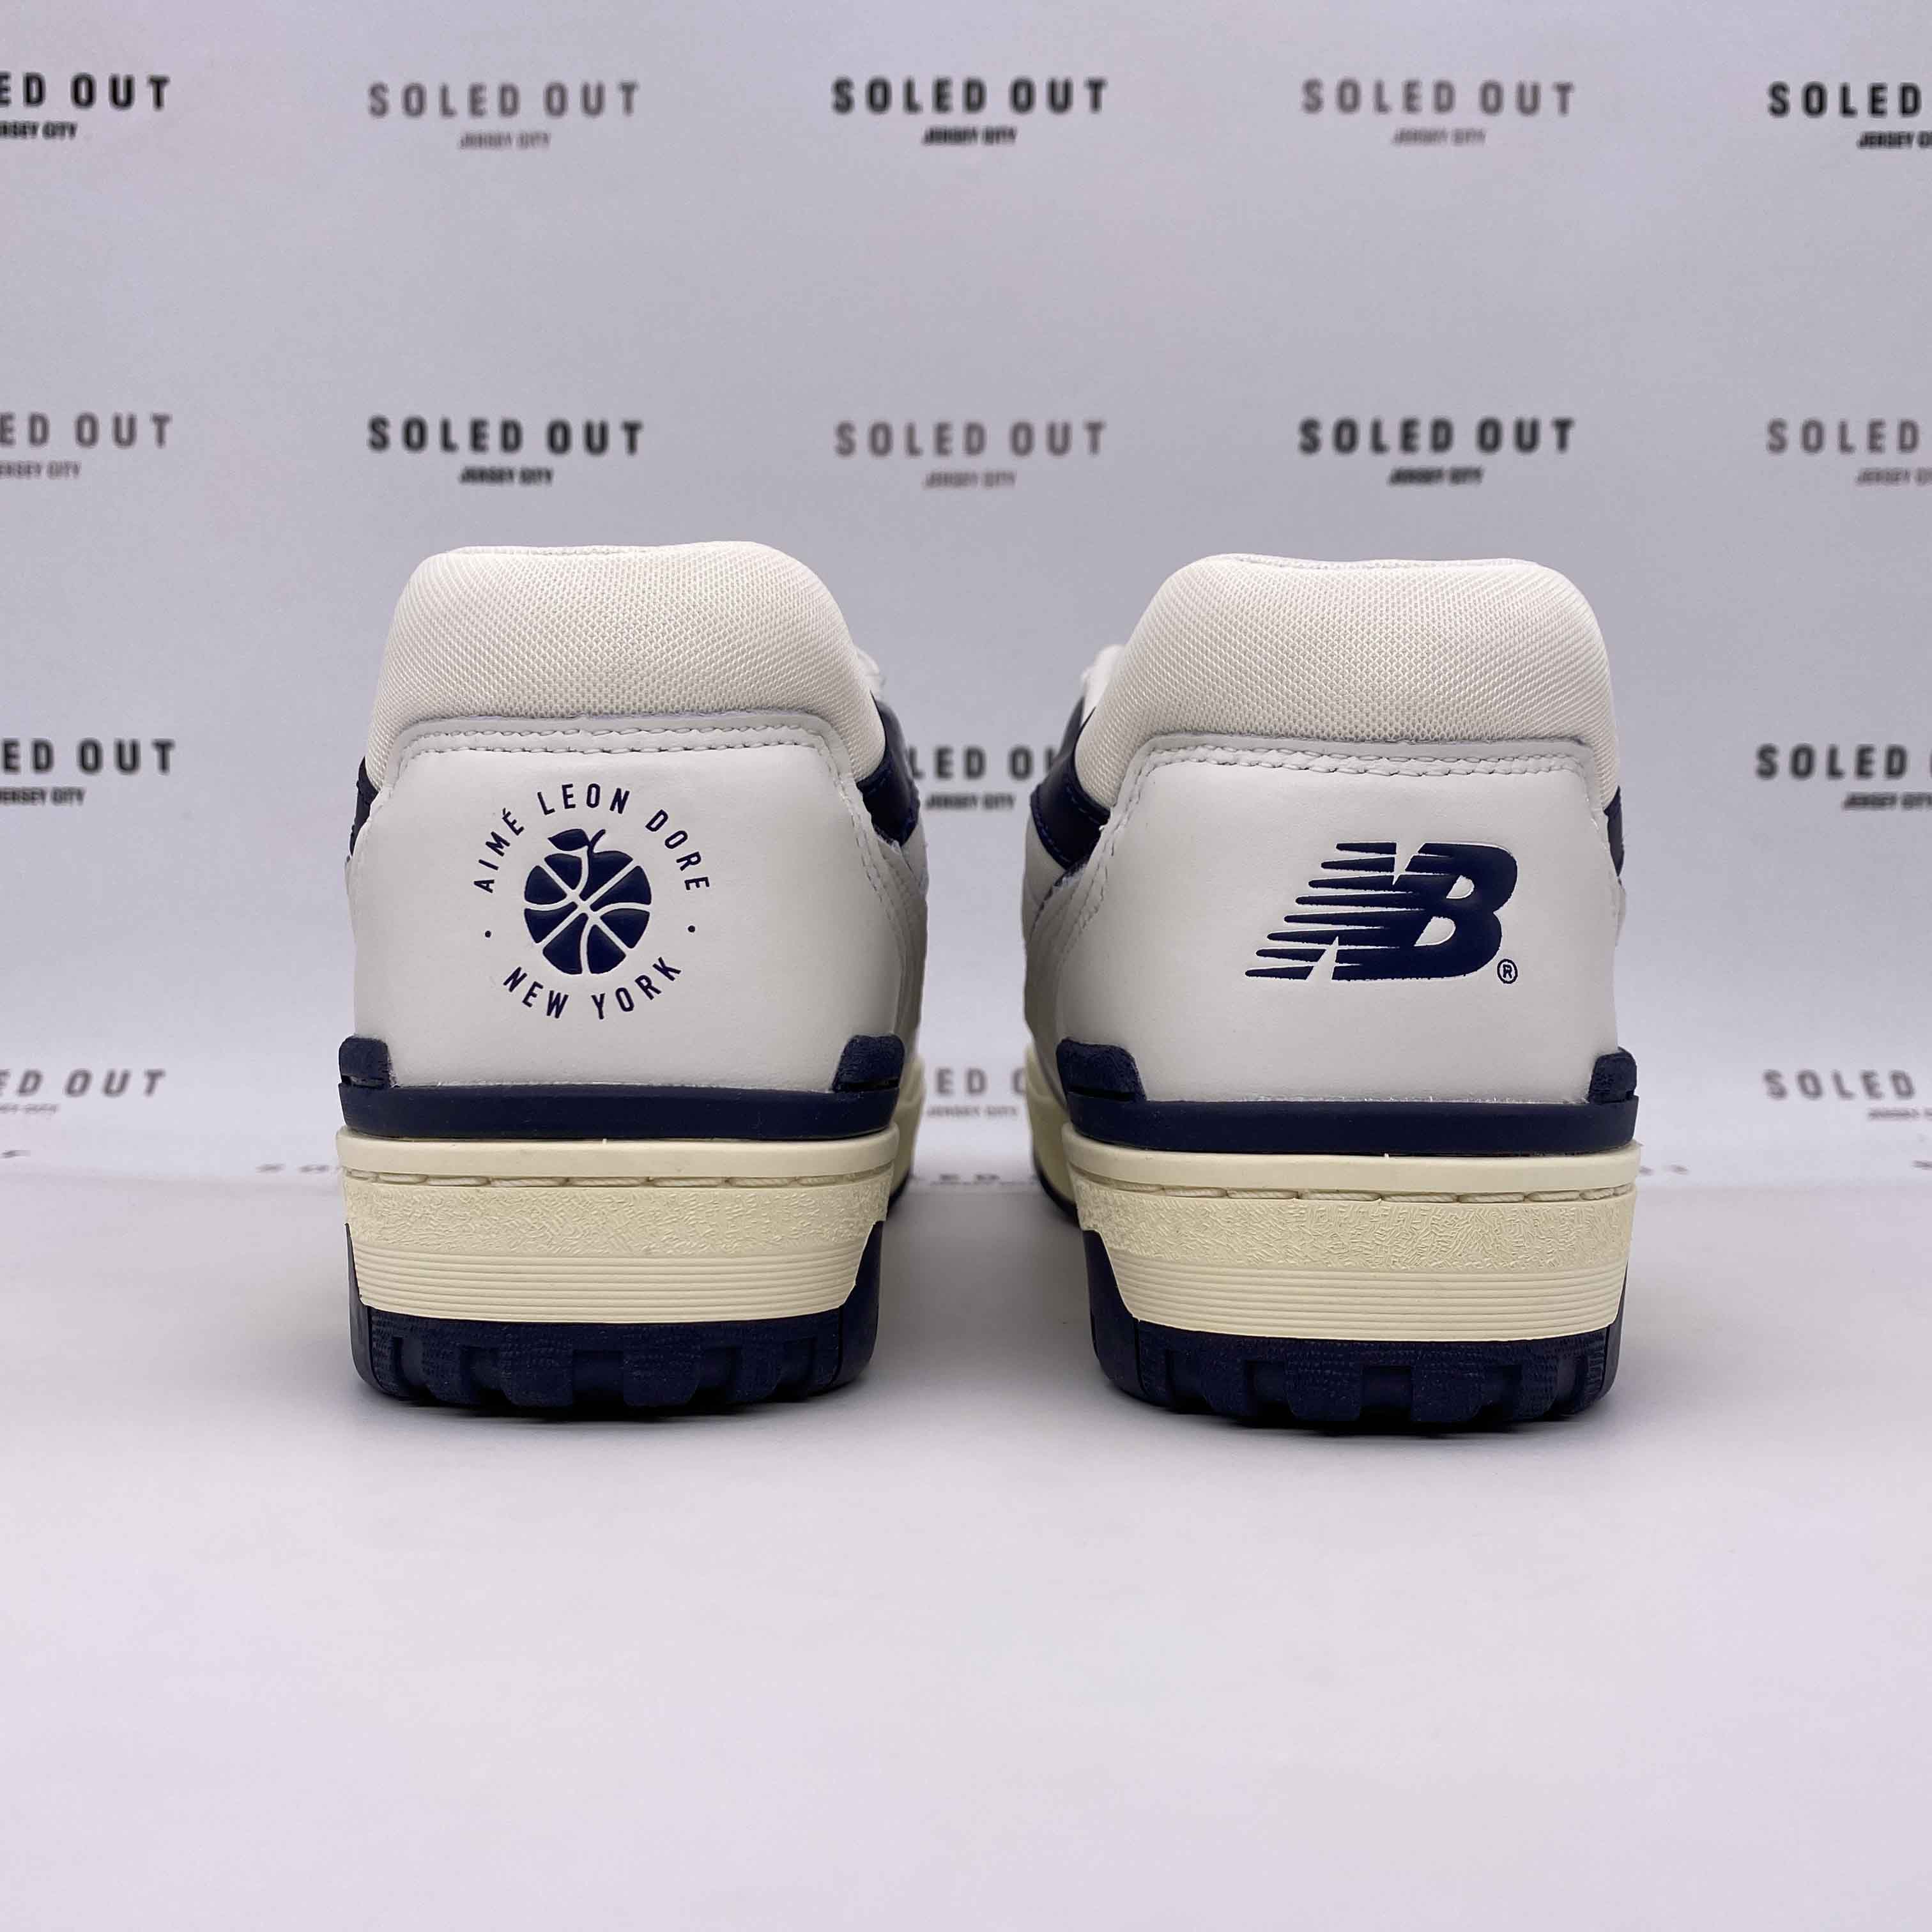 New Balance 550 "White Navy" 2020 New Size 7